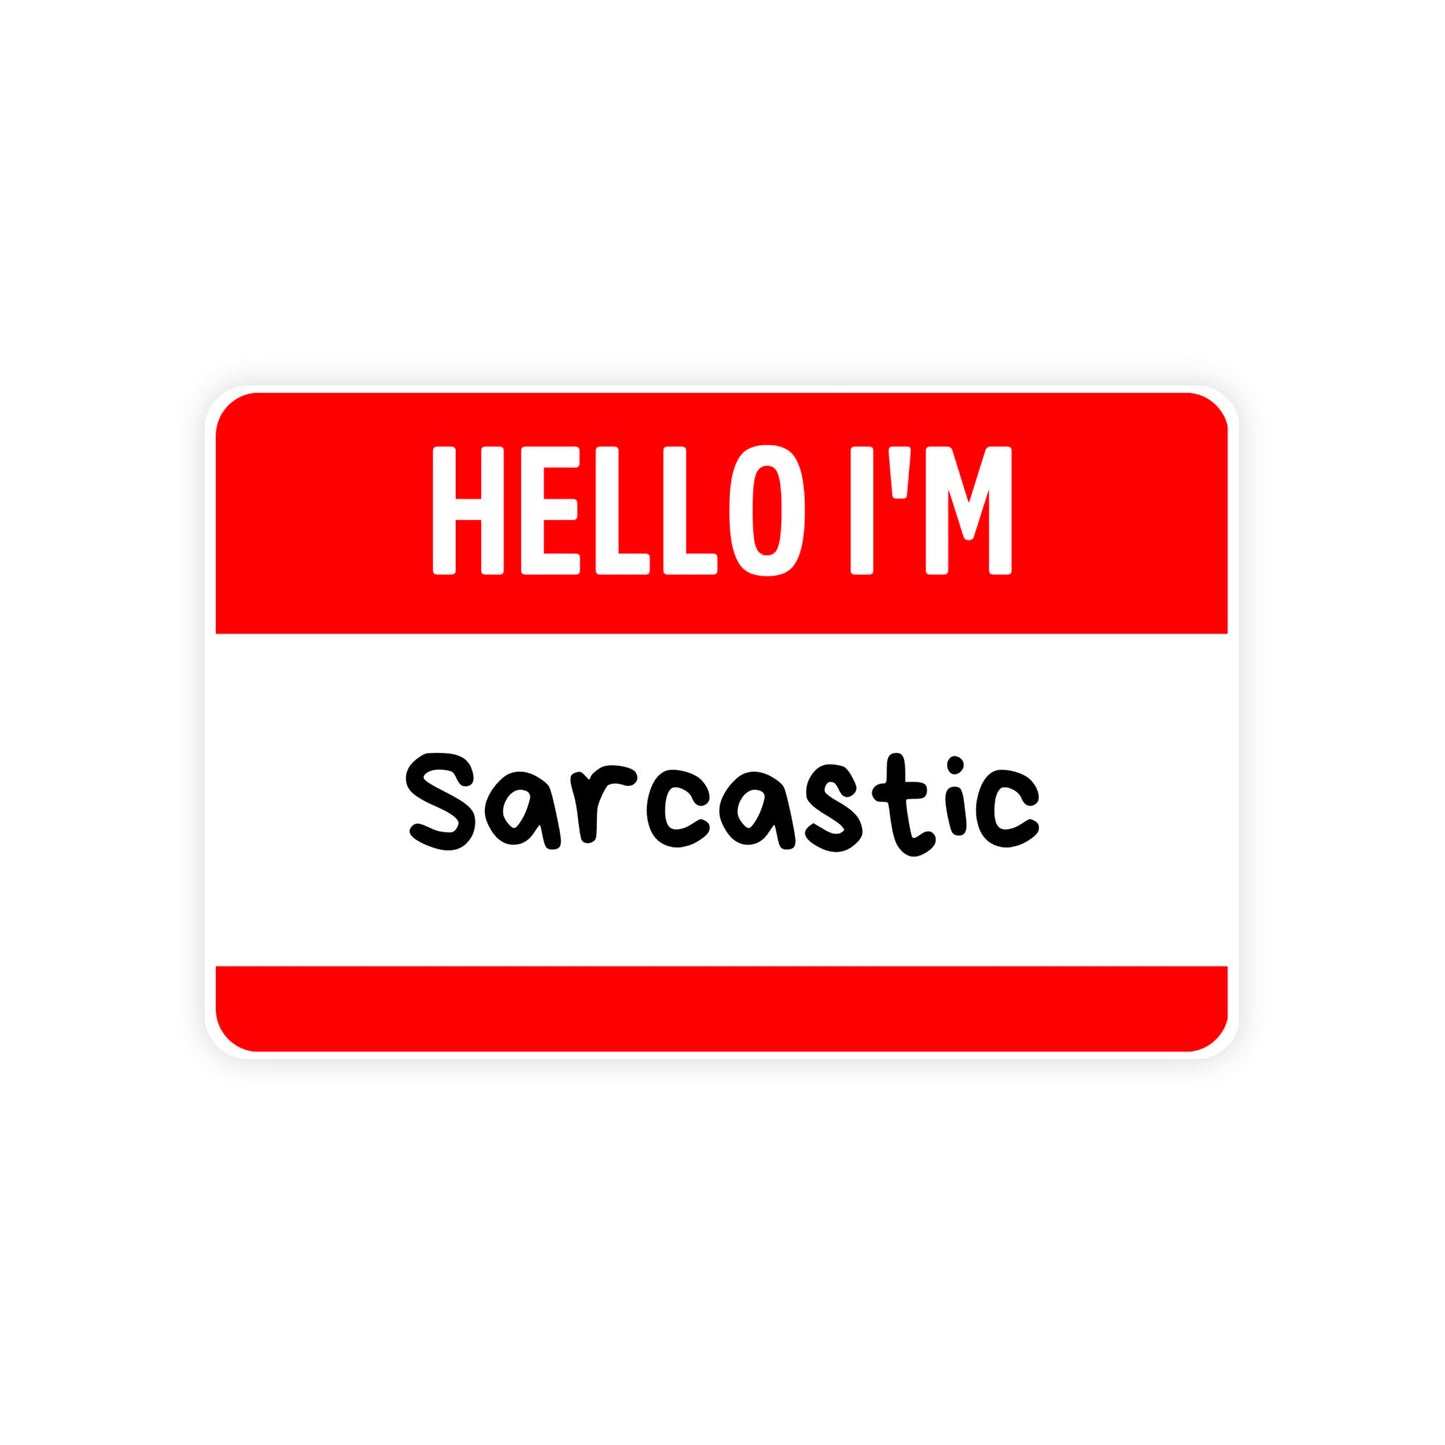 Hello I'm Sarcastic Name Tag Sticker